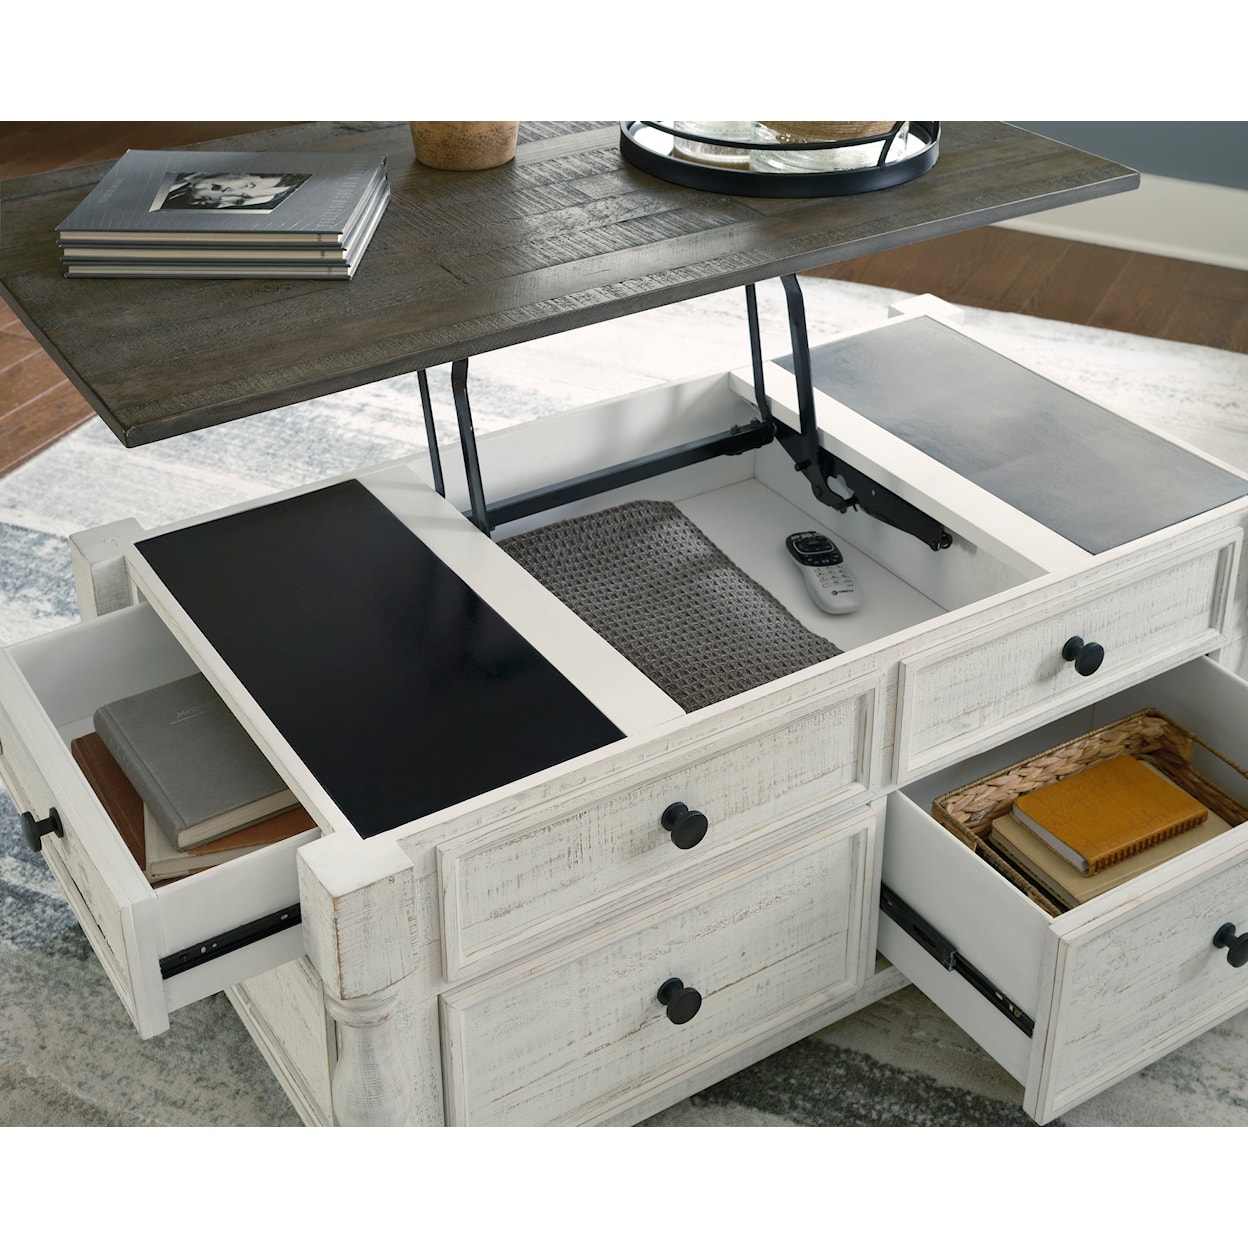 Signature Design Havalance Lift-Top Coffee Table